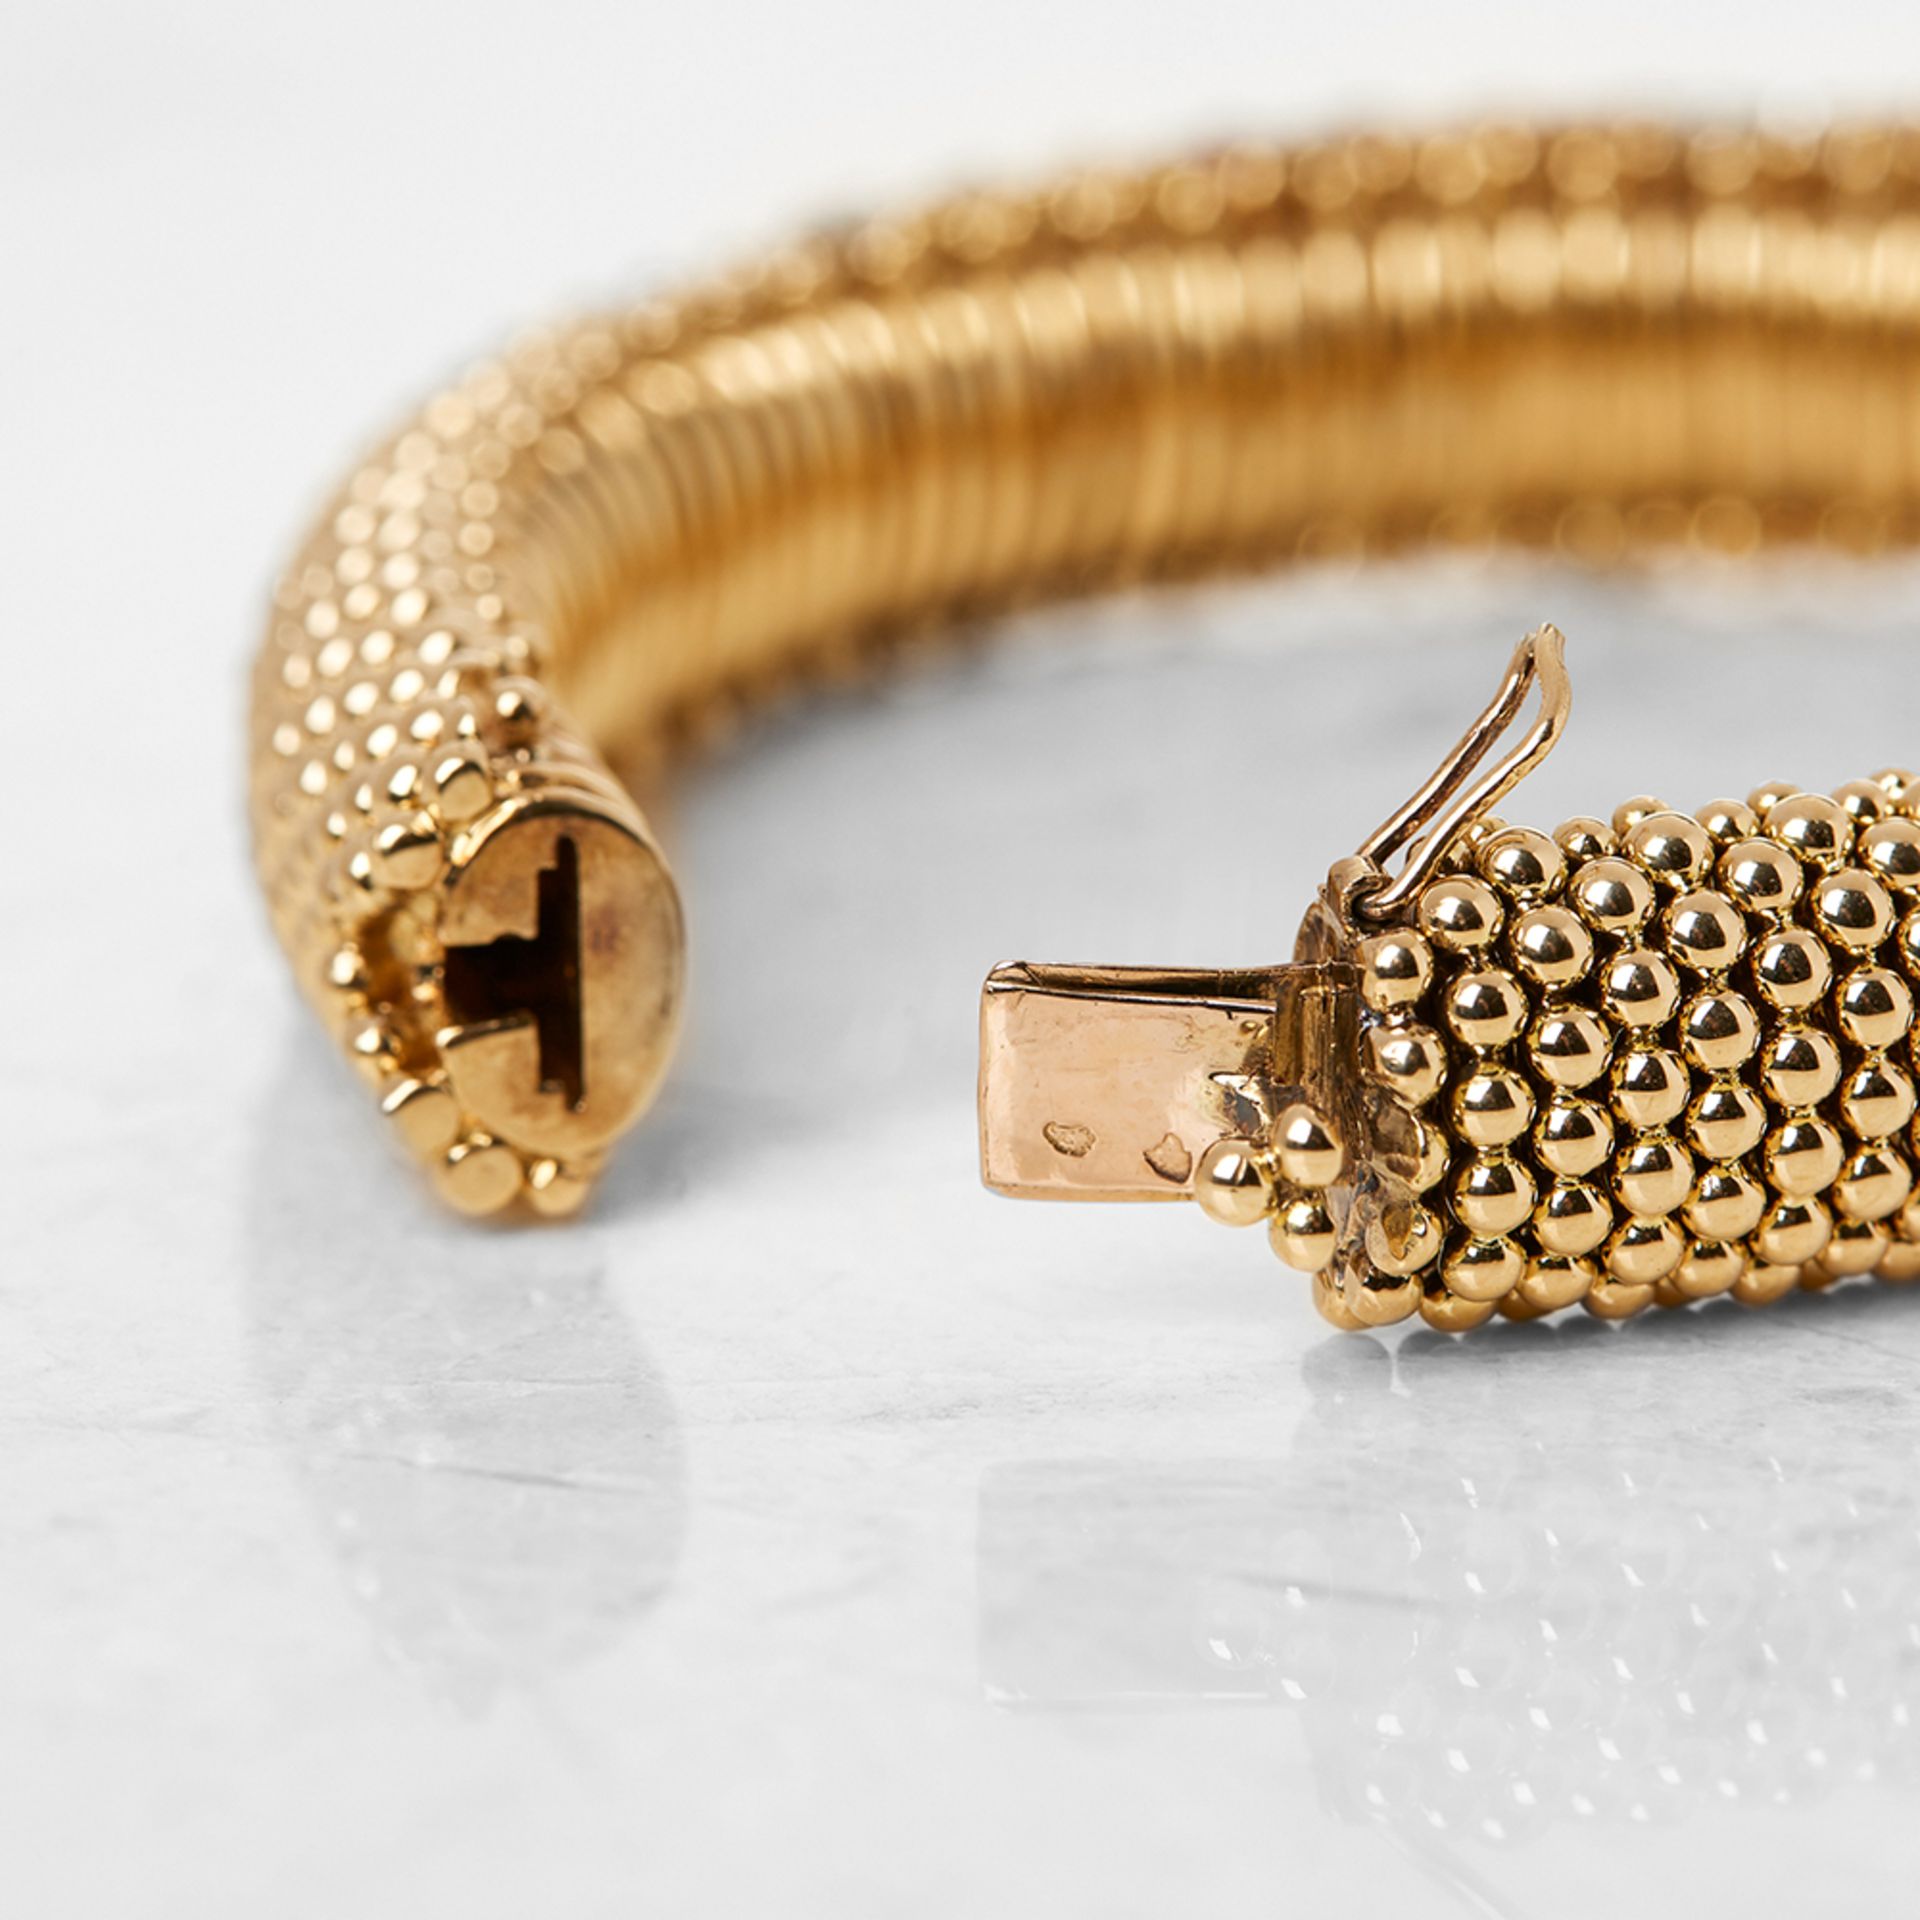 Van Cleef & Arpels 18k Yellow Gold Ruby & Diamond Vintage Bracelet with Presentation Box - Image 8 of 16